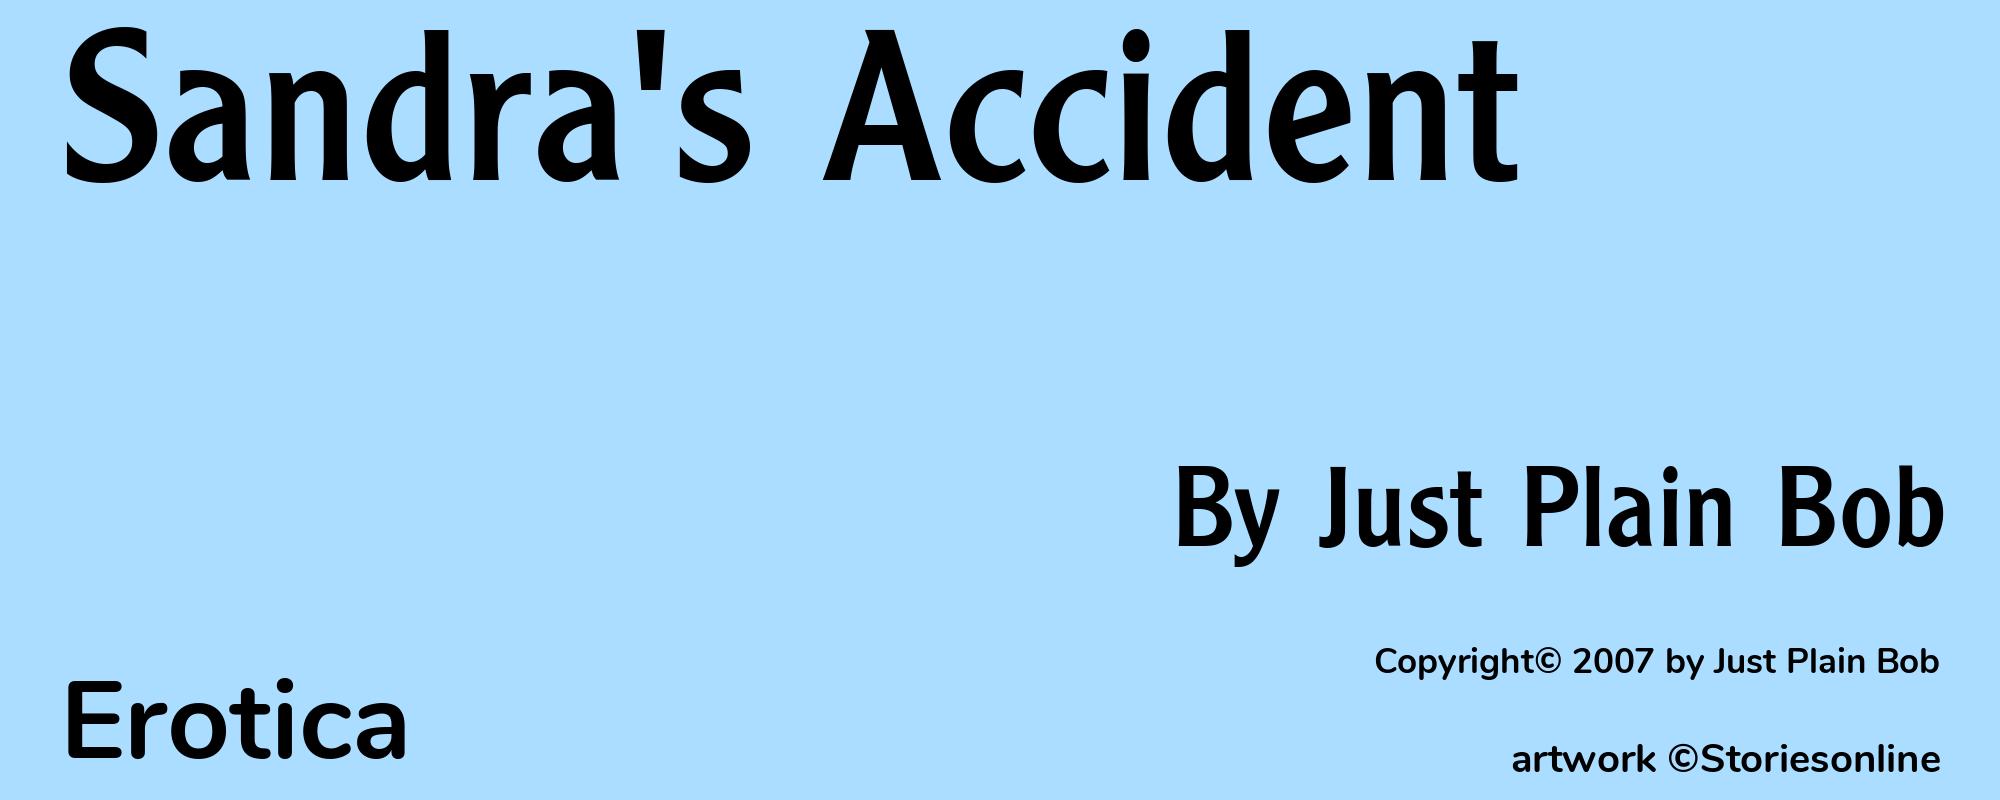 Sandra's Accident - Cover